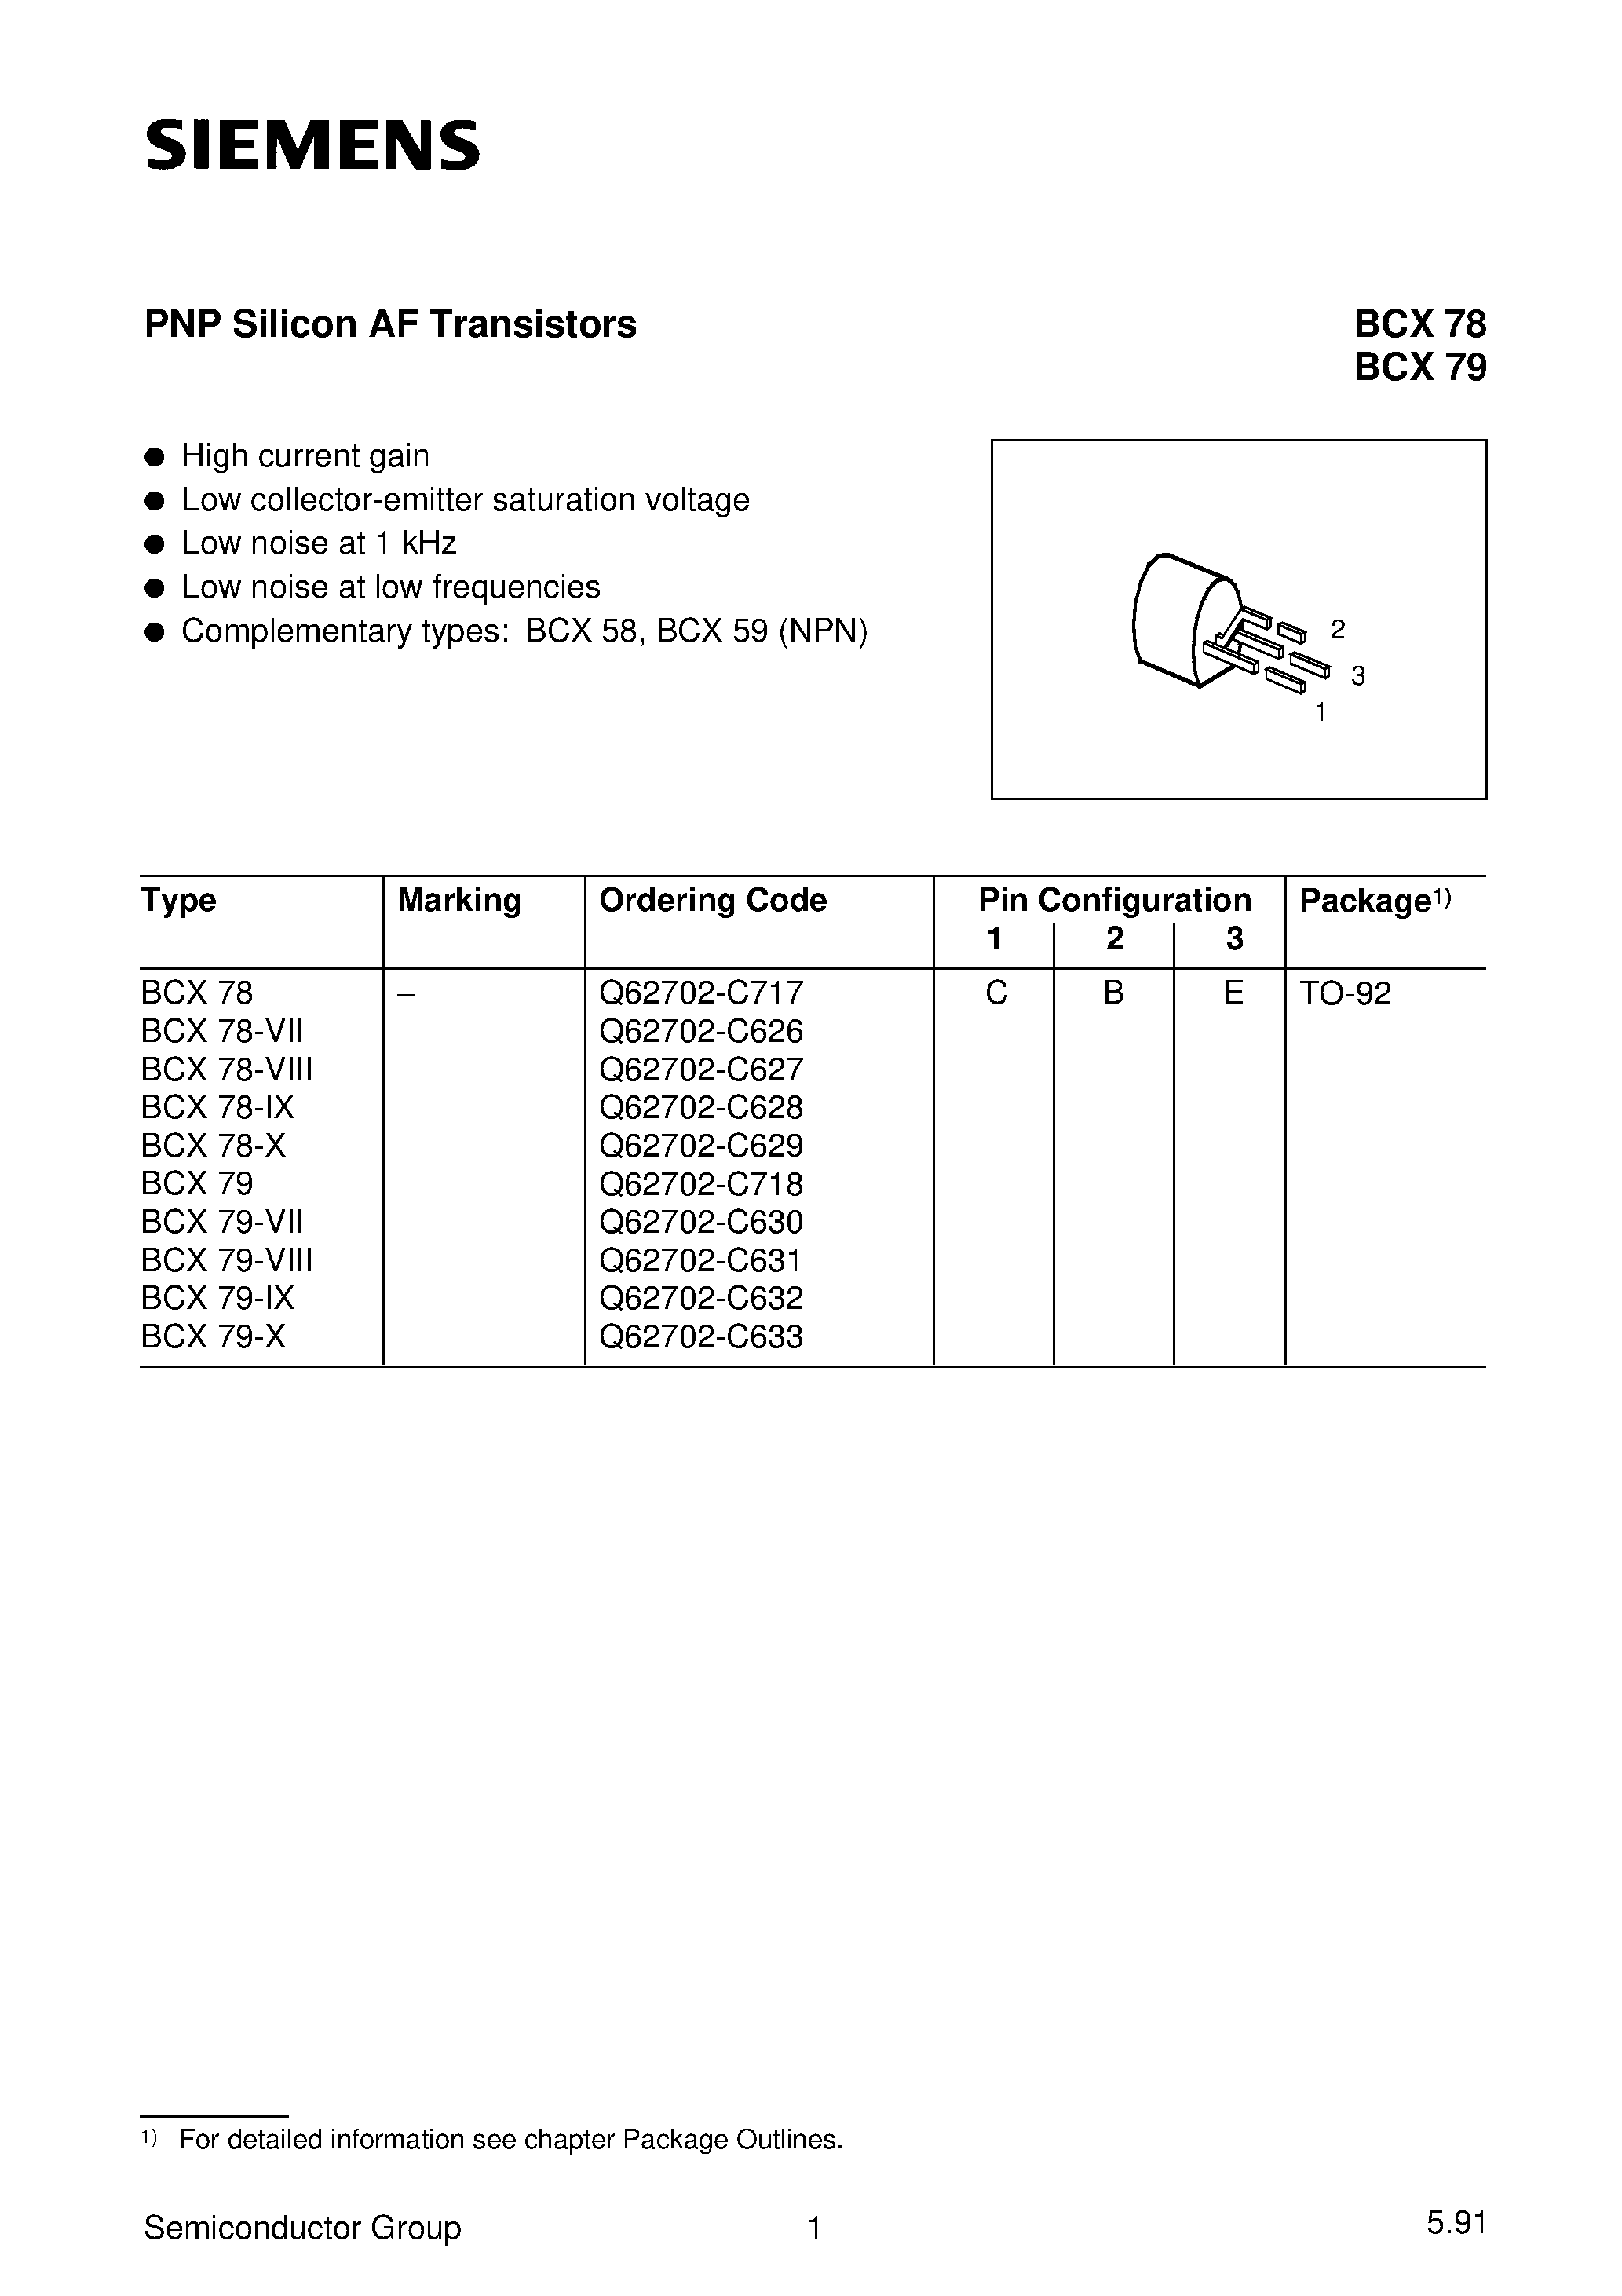 Datasheet BCX78-VII - PNP Silicon AF Transistors (High current gain Low collector-emitter saturation voltage) page 1